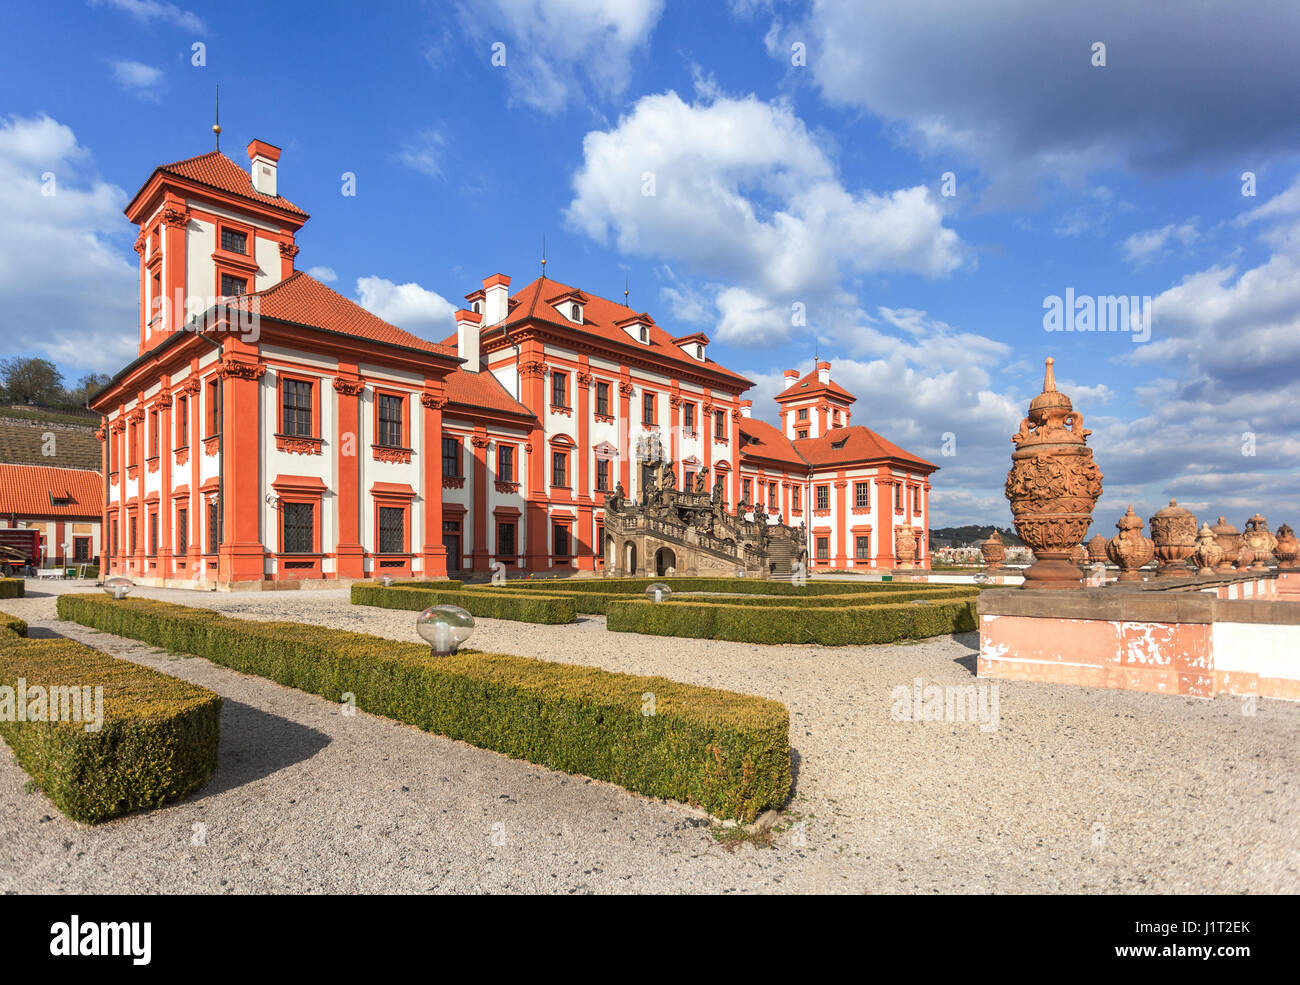 Barocke Schloss Troja, Prag, Tschechische Republik, Europa Stockfoto